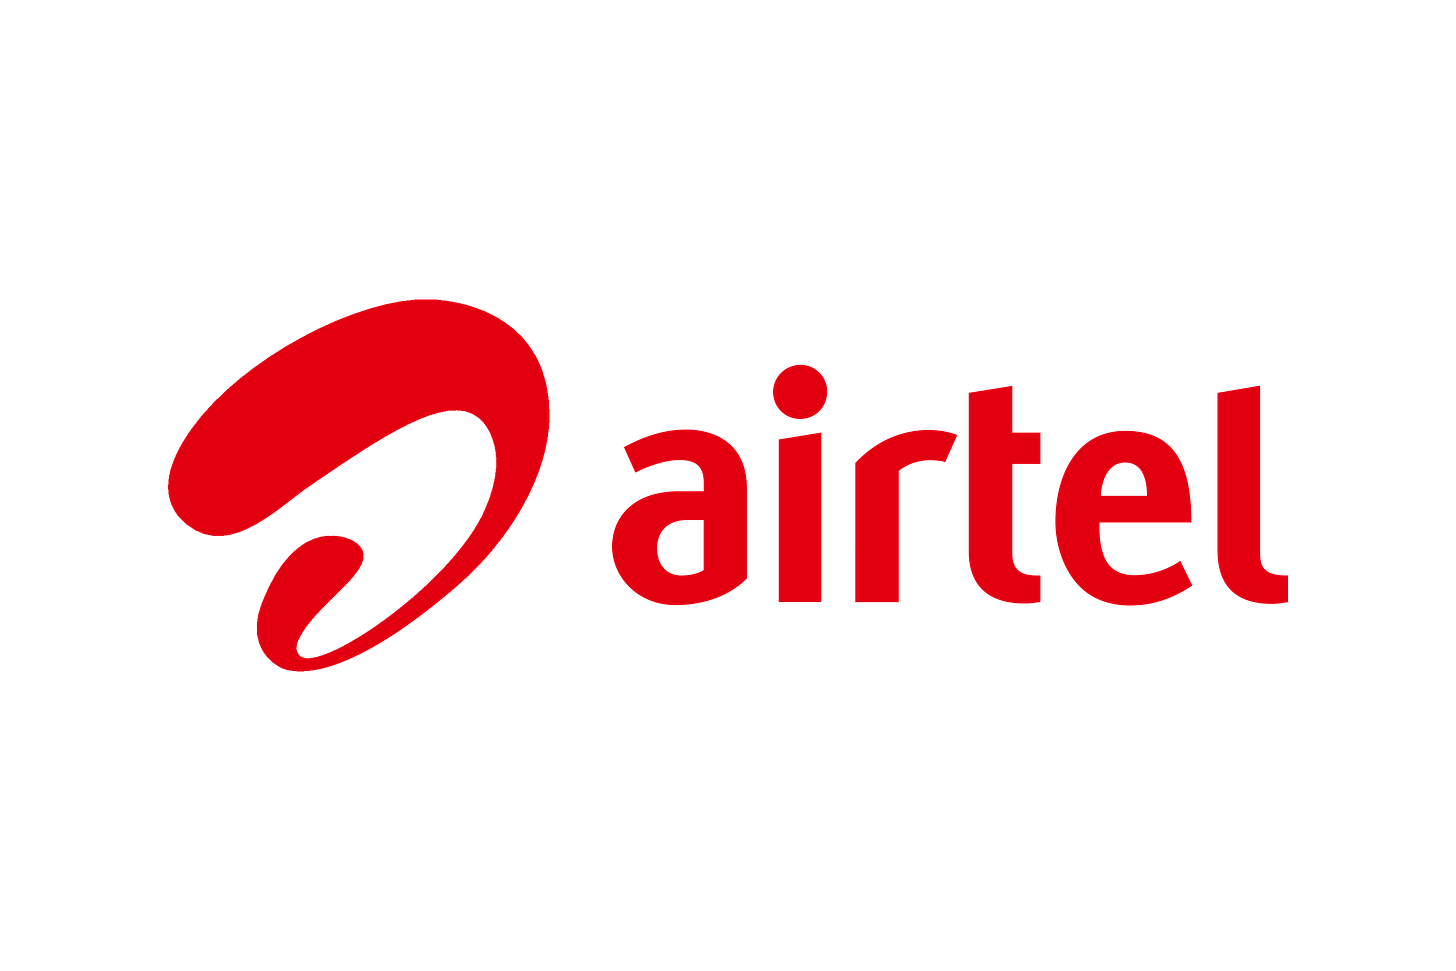 Download Airtel Africa Logo in SVG Vector or PNG File Format - Logo.wine